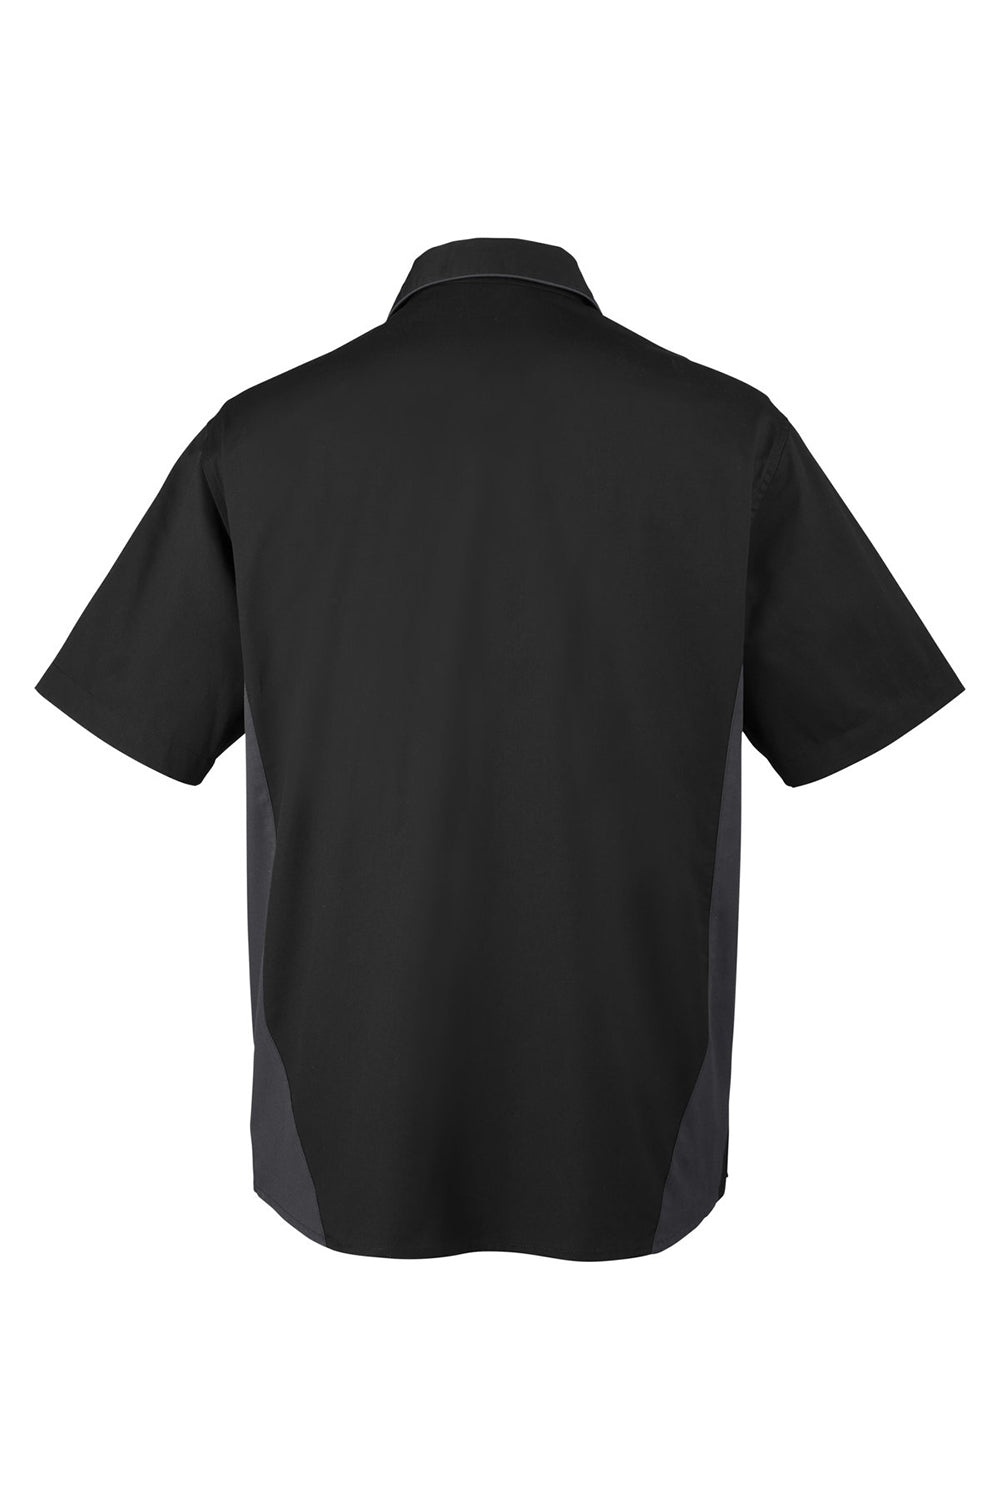 Harriton M586/M586T Mens Flash Colorblock Short Sleeve Button Down Shirt w/ Pocket Black/Dark Charcoal Grey Flat Back